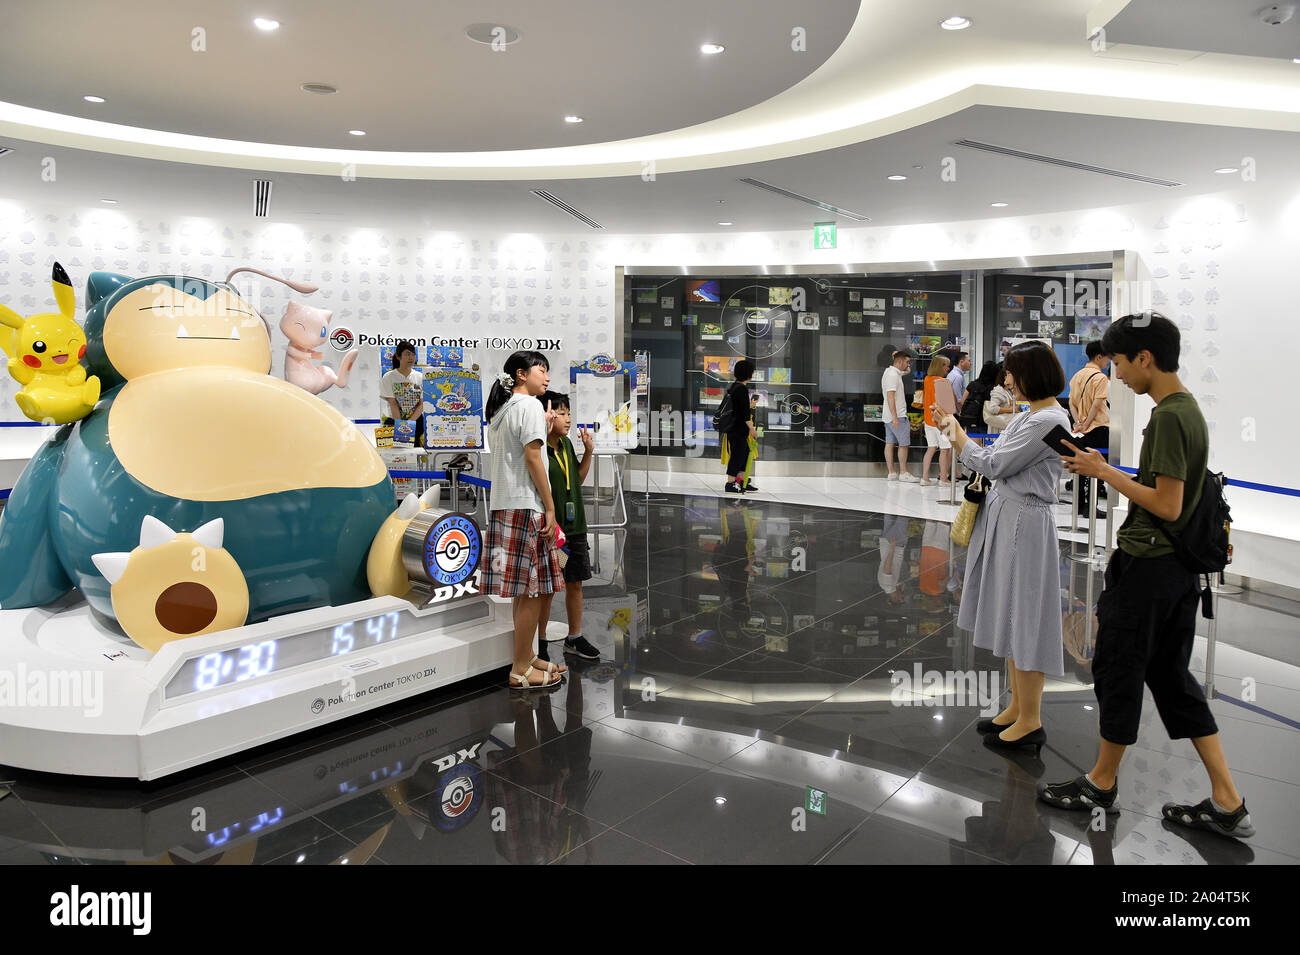 Doblez SIDA Apéndice Pokemon Center - Tokyo - Japan Stock Photo - Alamy